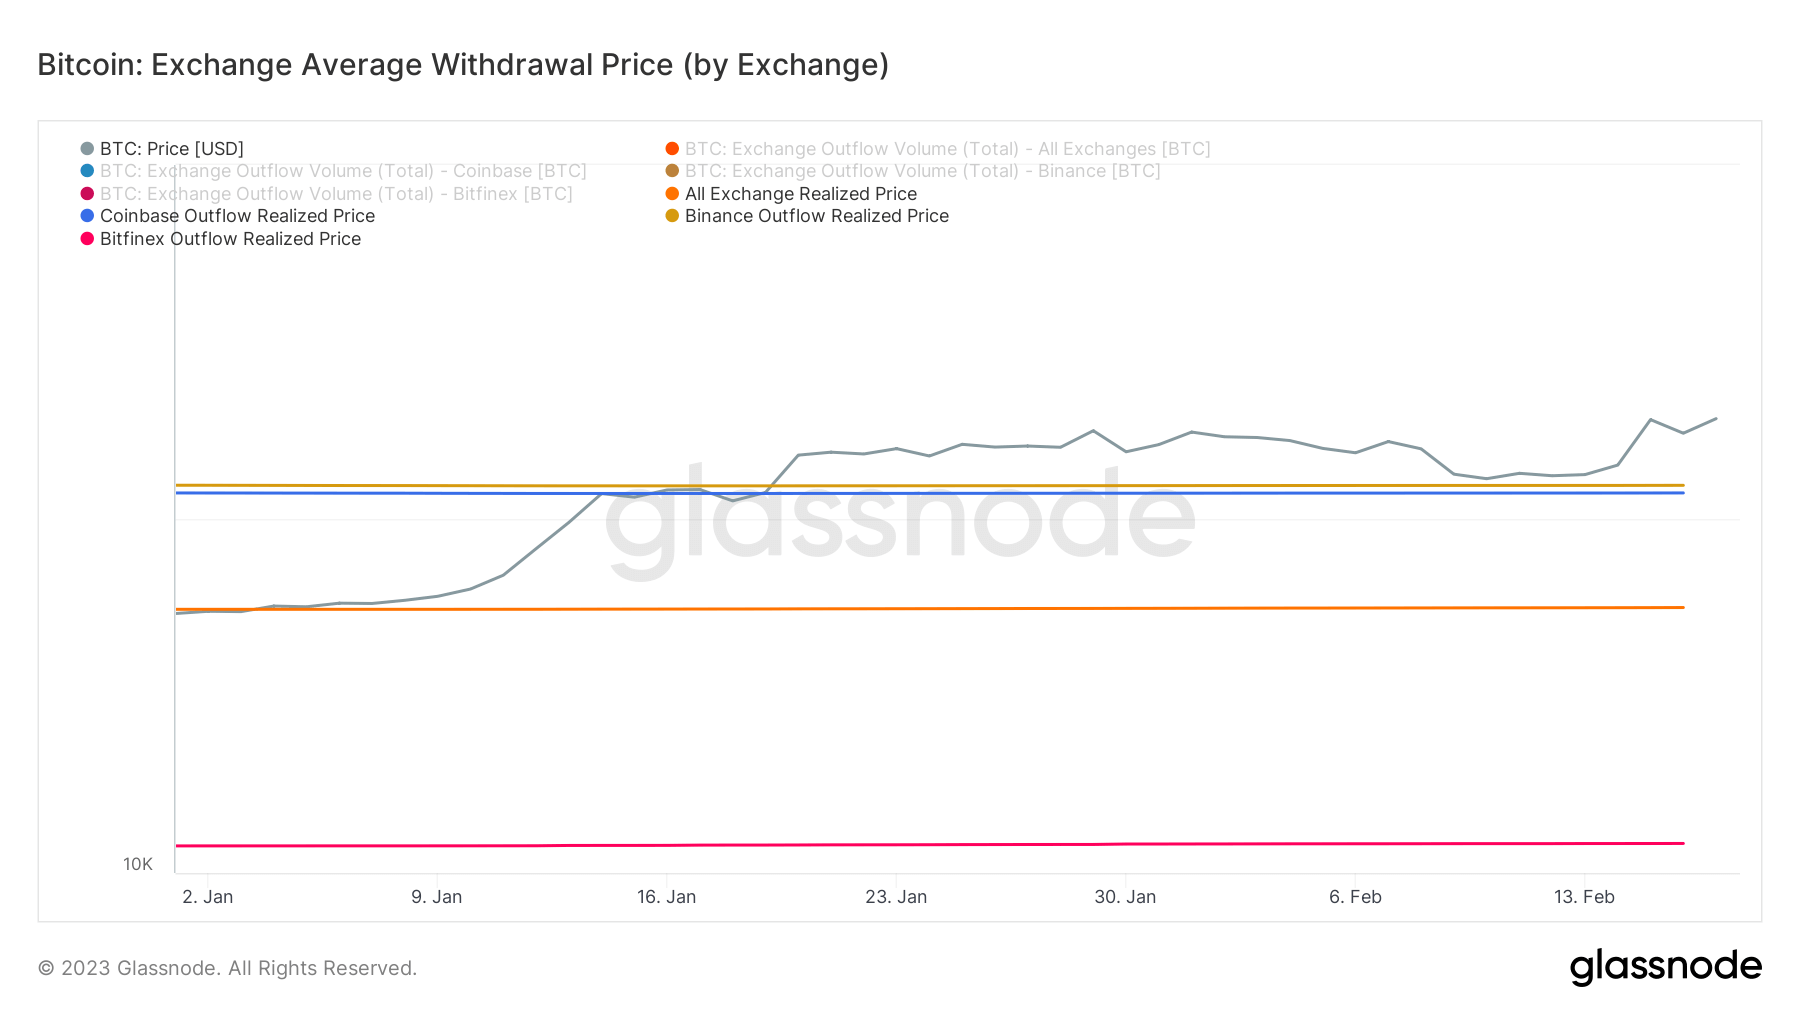 Exchange Withdrawal Price: (Source: Glassnode)